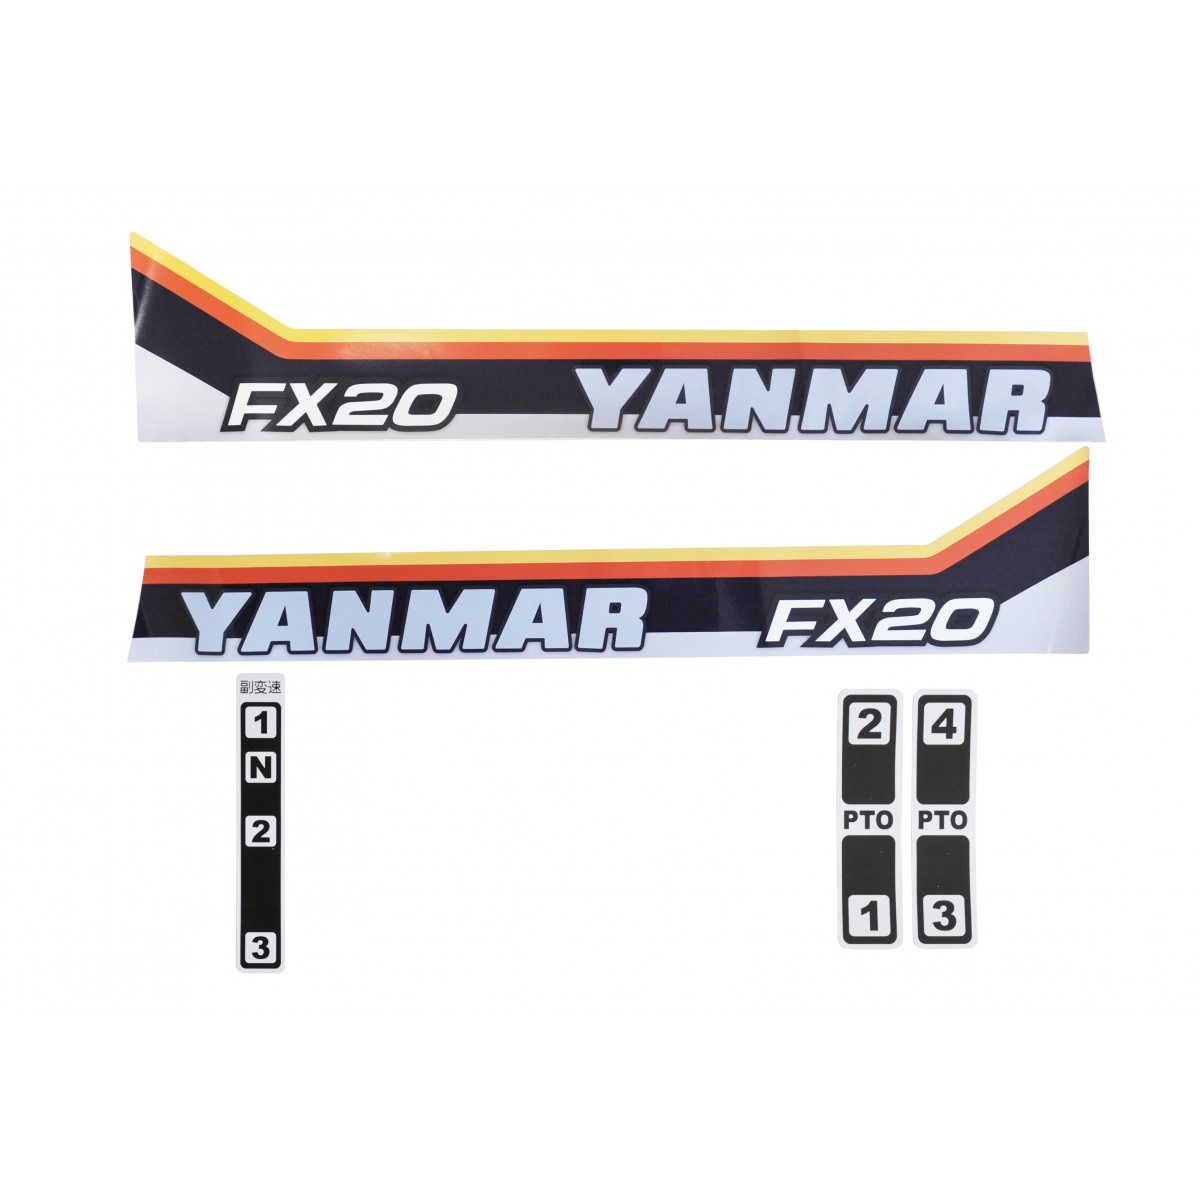 Yanmar FX20 stickers